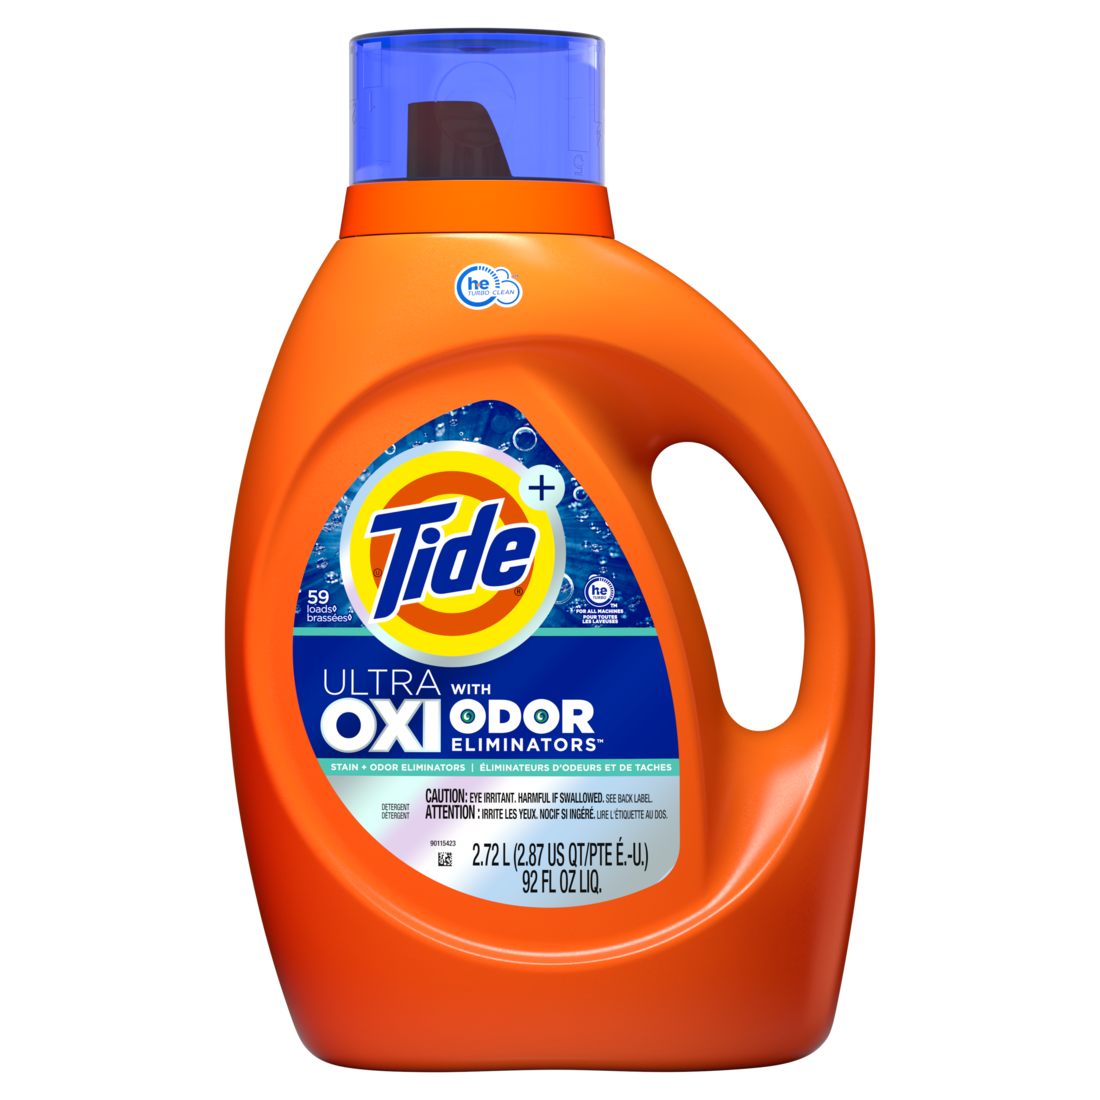 Tide Ultra Oxi with Odor Eliminator 8oz